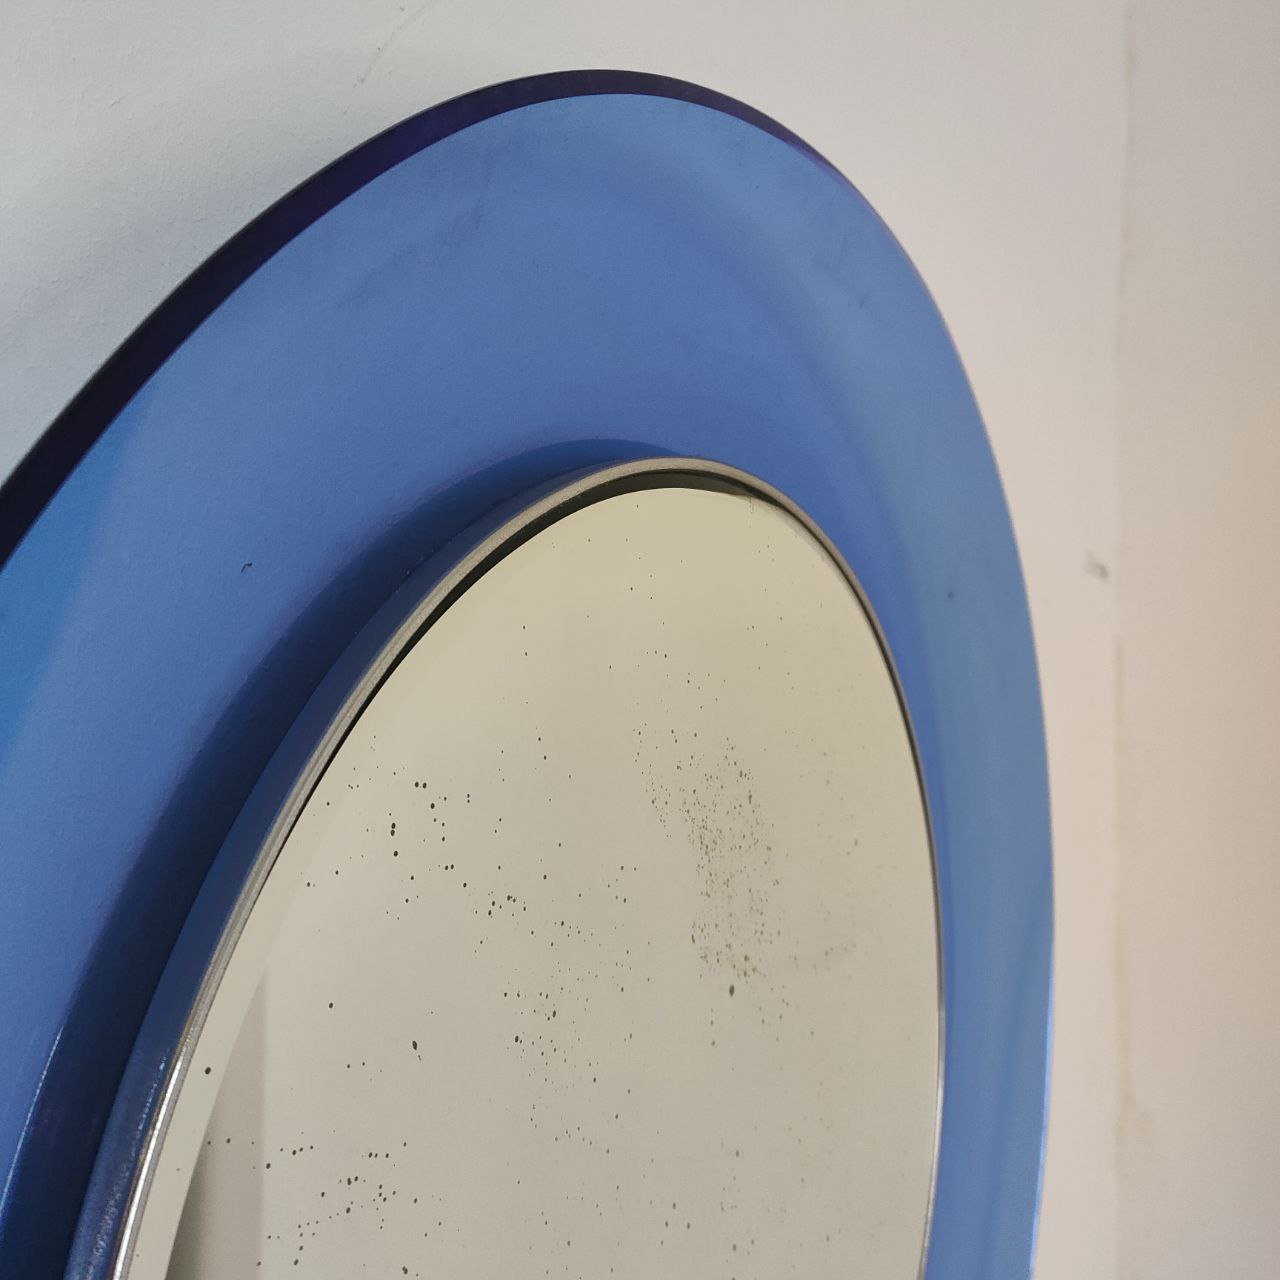 visionidepoca-modern-art-mirror-max-enlargement-for-fontana-arte-mod-1669-cobalt-blue-design-curved-glass-detail-curvature-mirror-grinding